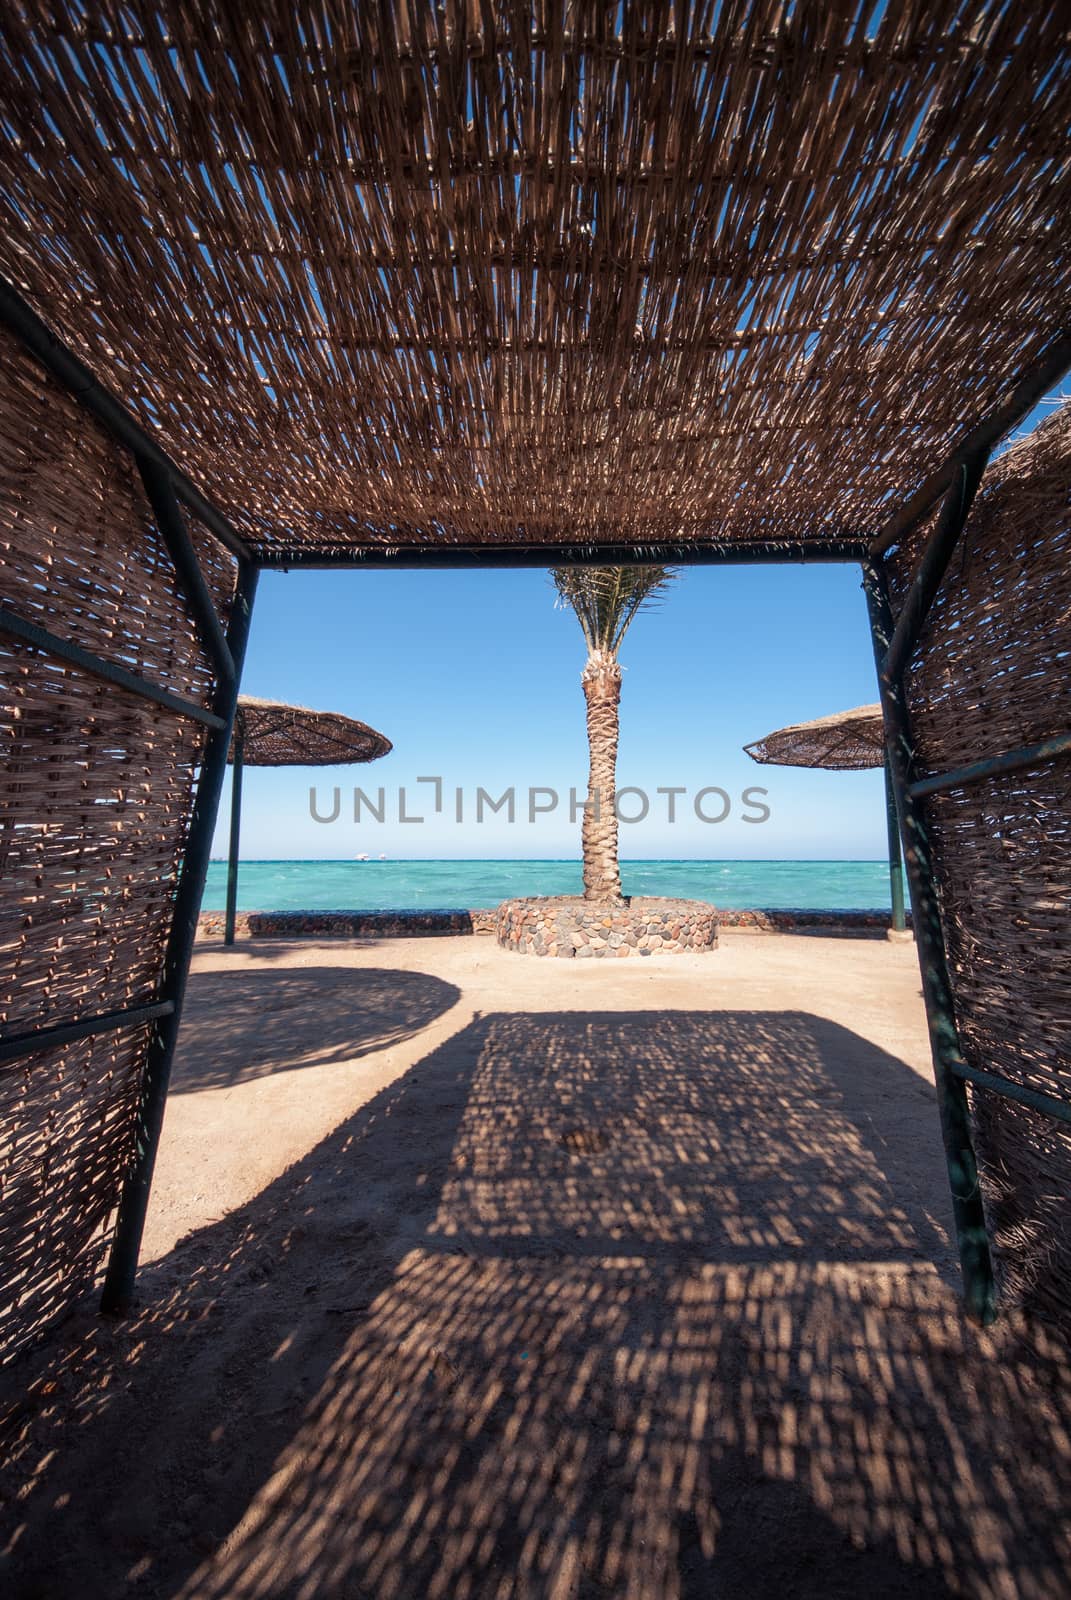 wicker sunshade shelter hovel on the beach in ocean sea resort. Vacation summer time by skrotov